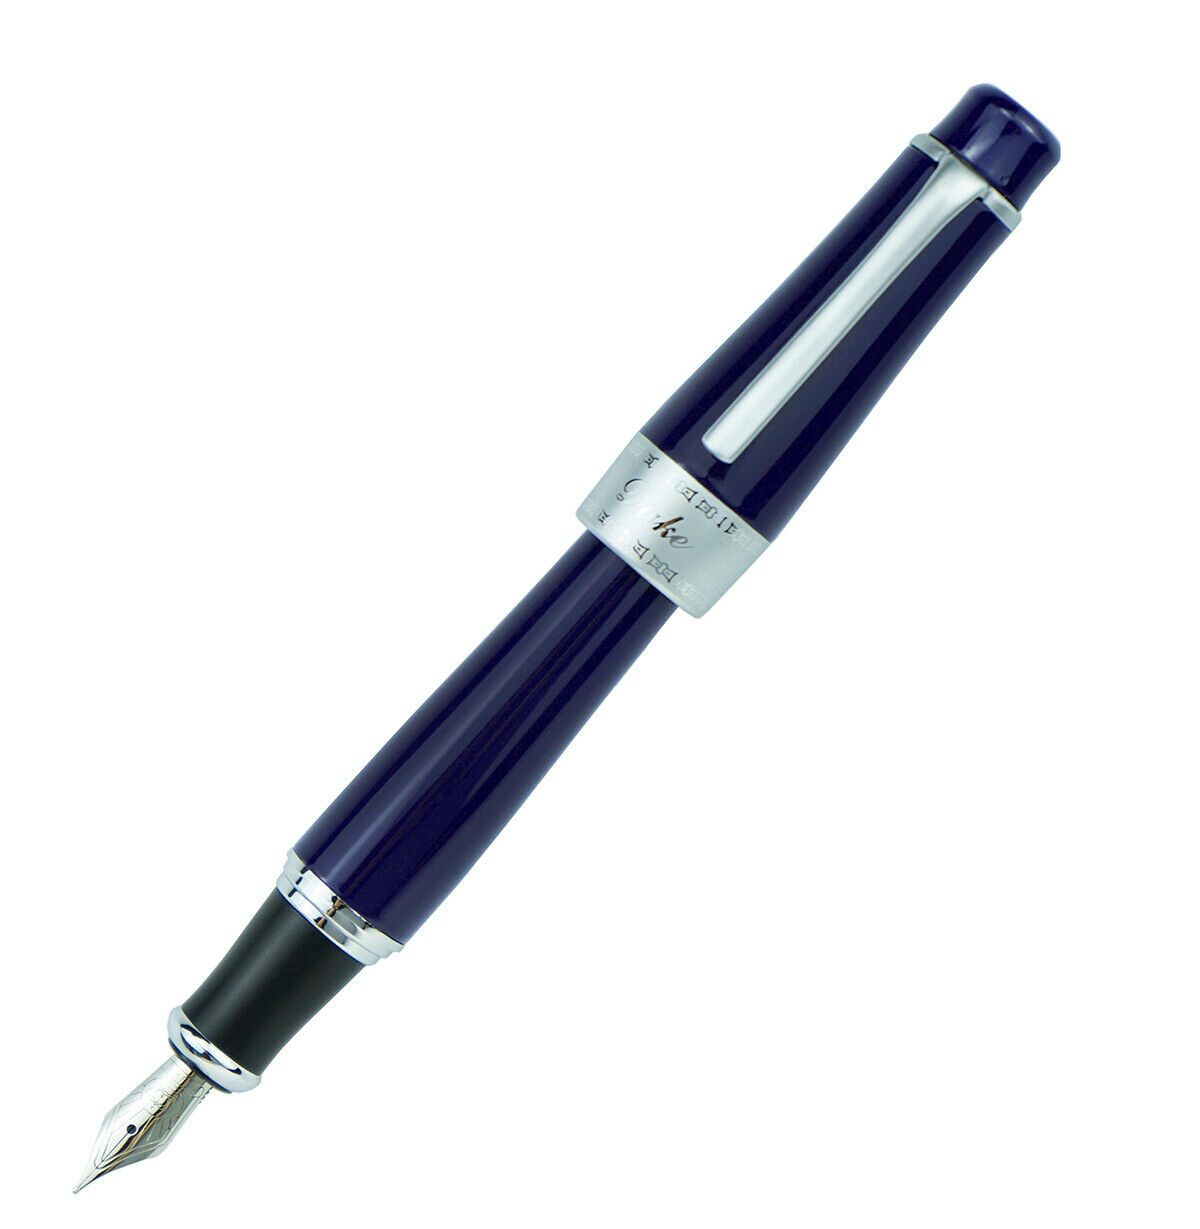 Перьевая ручка Duke Memory Charlie Chaplin, Китай. Перо FM (0.6 мм), заправка поршень. Цвет синий.